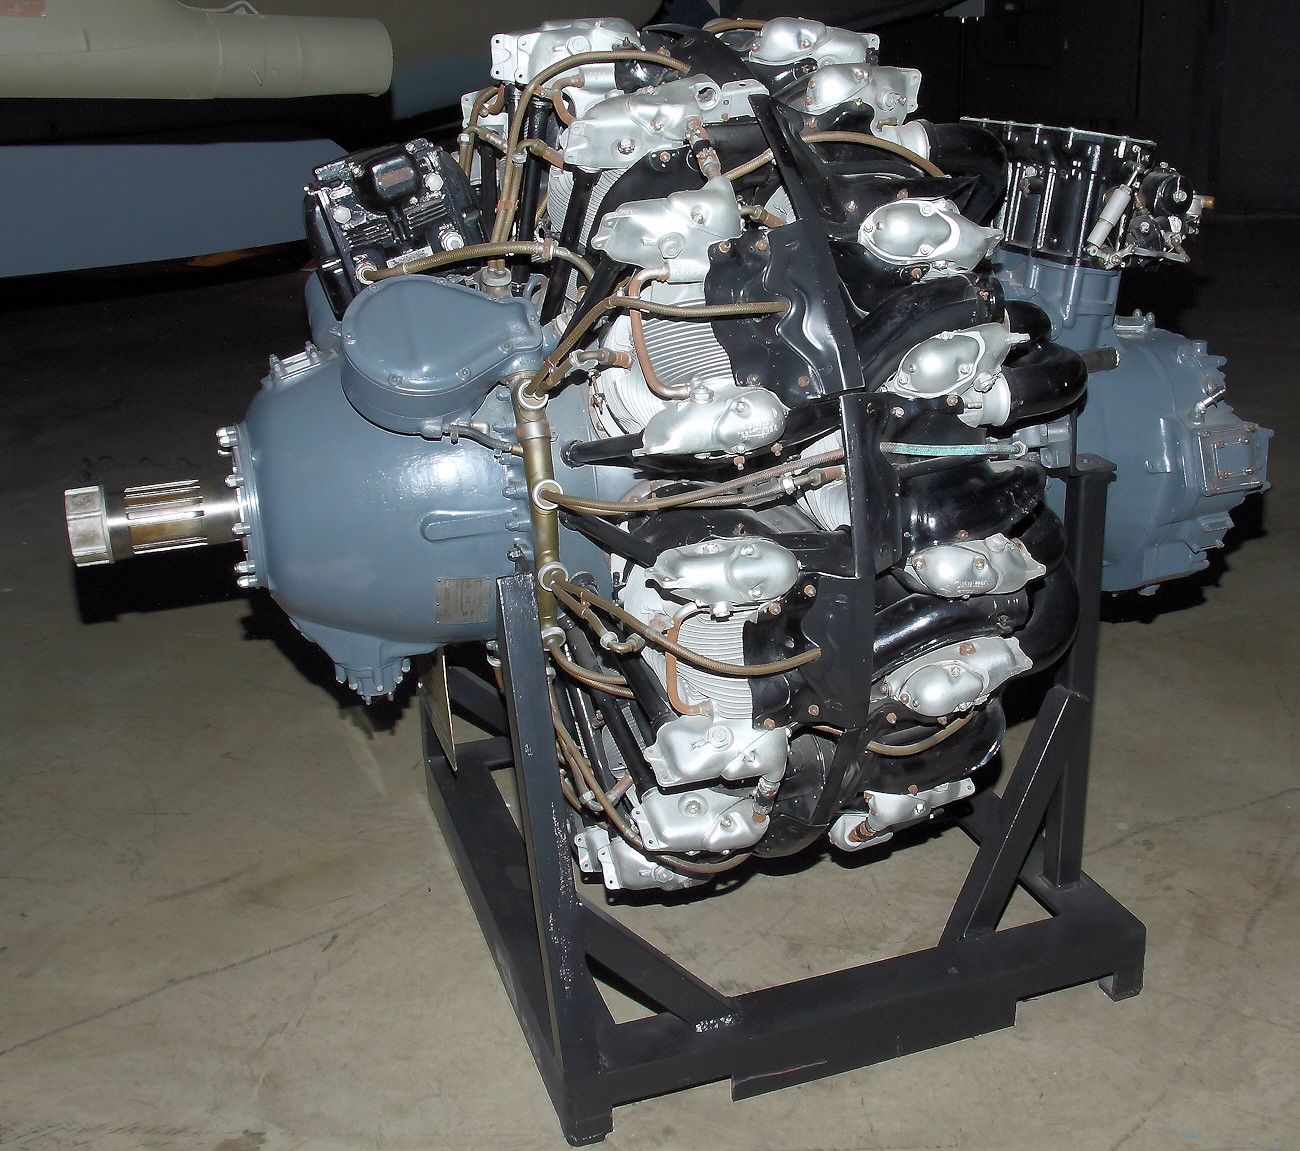 Pratt & Whitney R-2800 Double Wasp Sternmotor